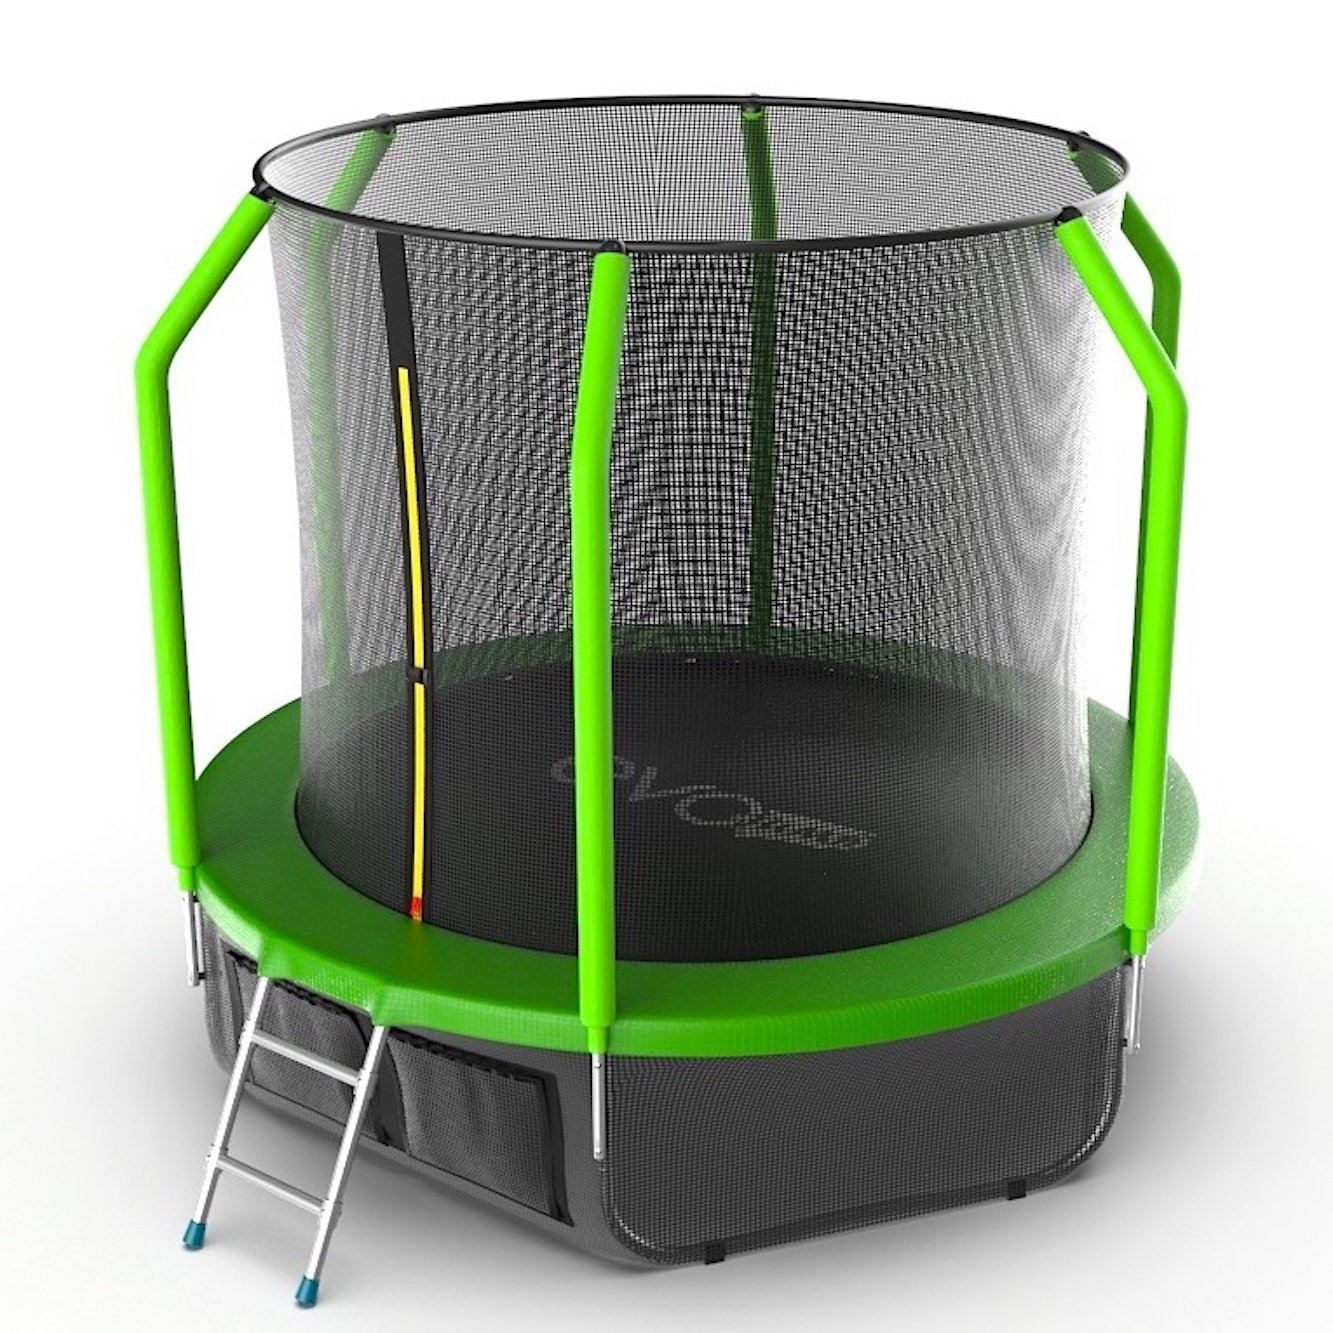 Evo Jump Cosmo 8ft (Green) + Lower net. макс. нагрузка: от 80 кг